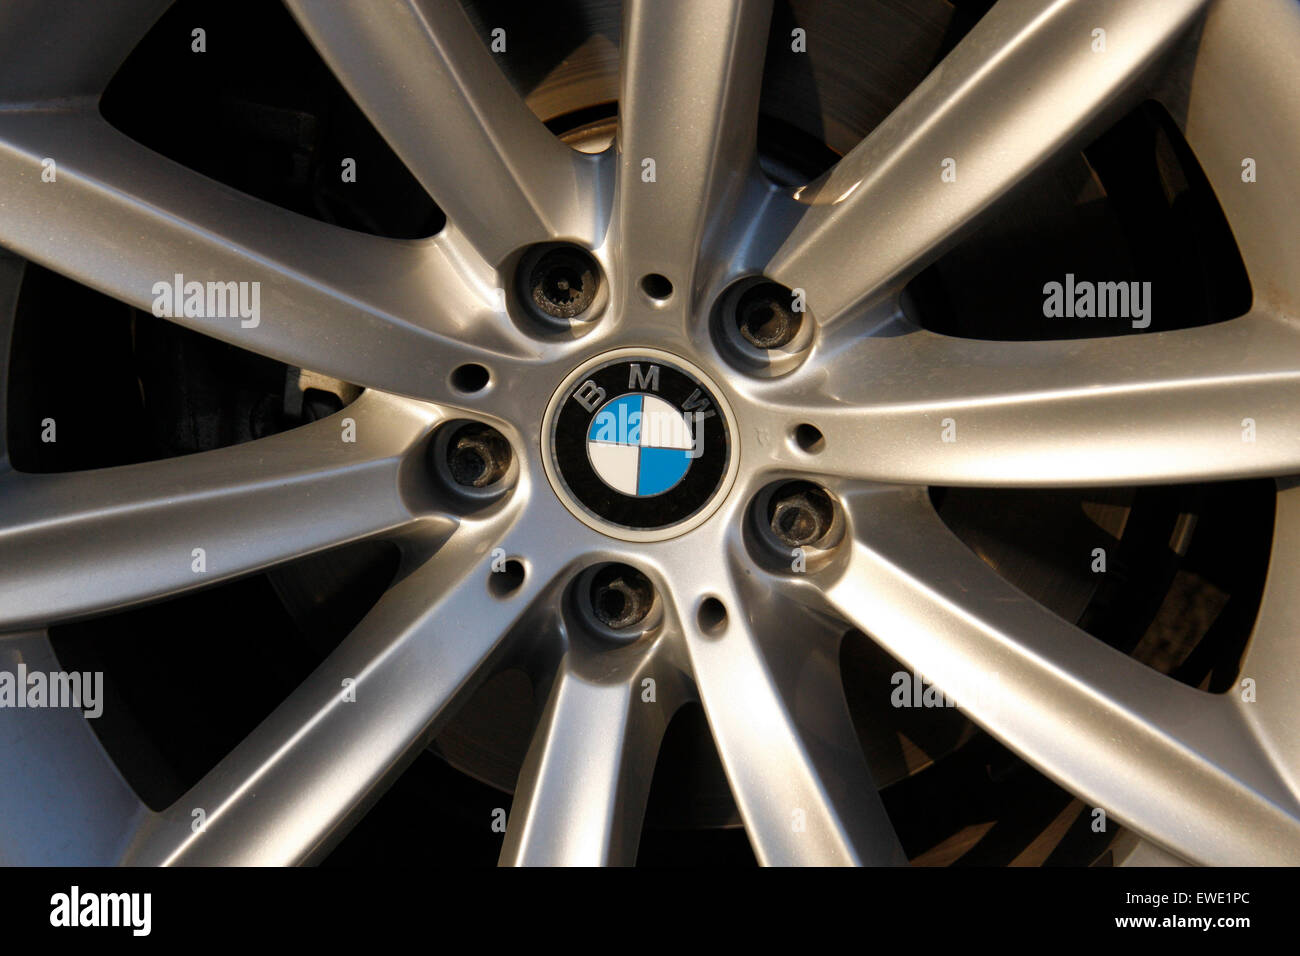 JUNE 2008 - BERLIN: the logo embleme of the German car manufacturer BMW - Bayerische Motorenwerke. Stock Photo